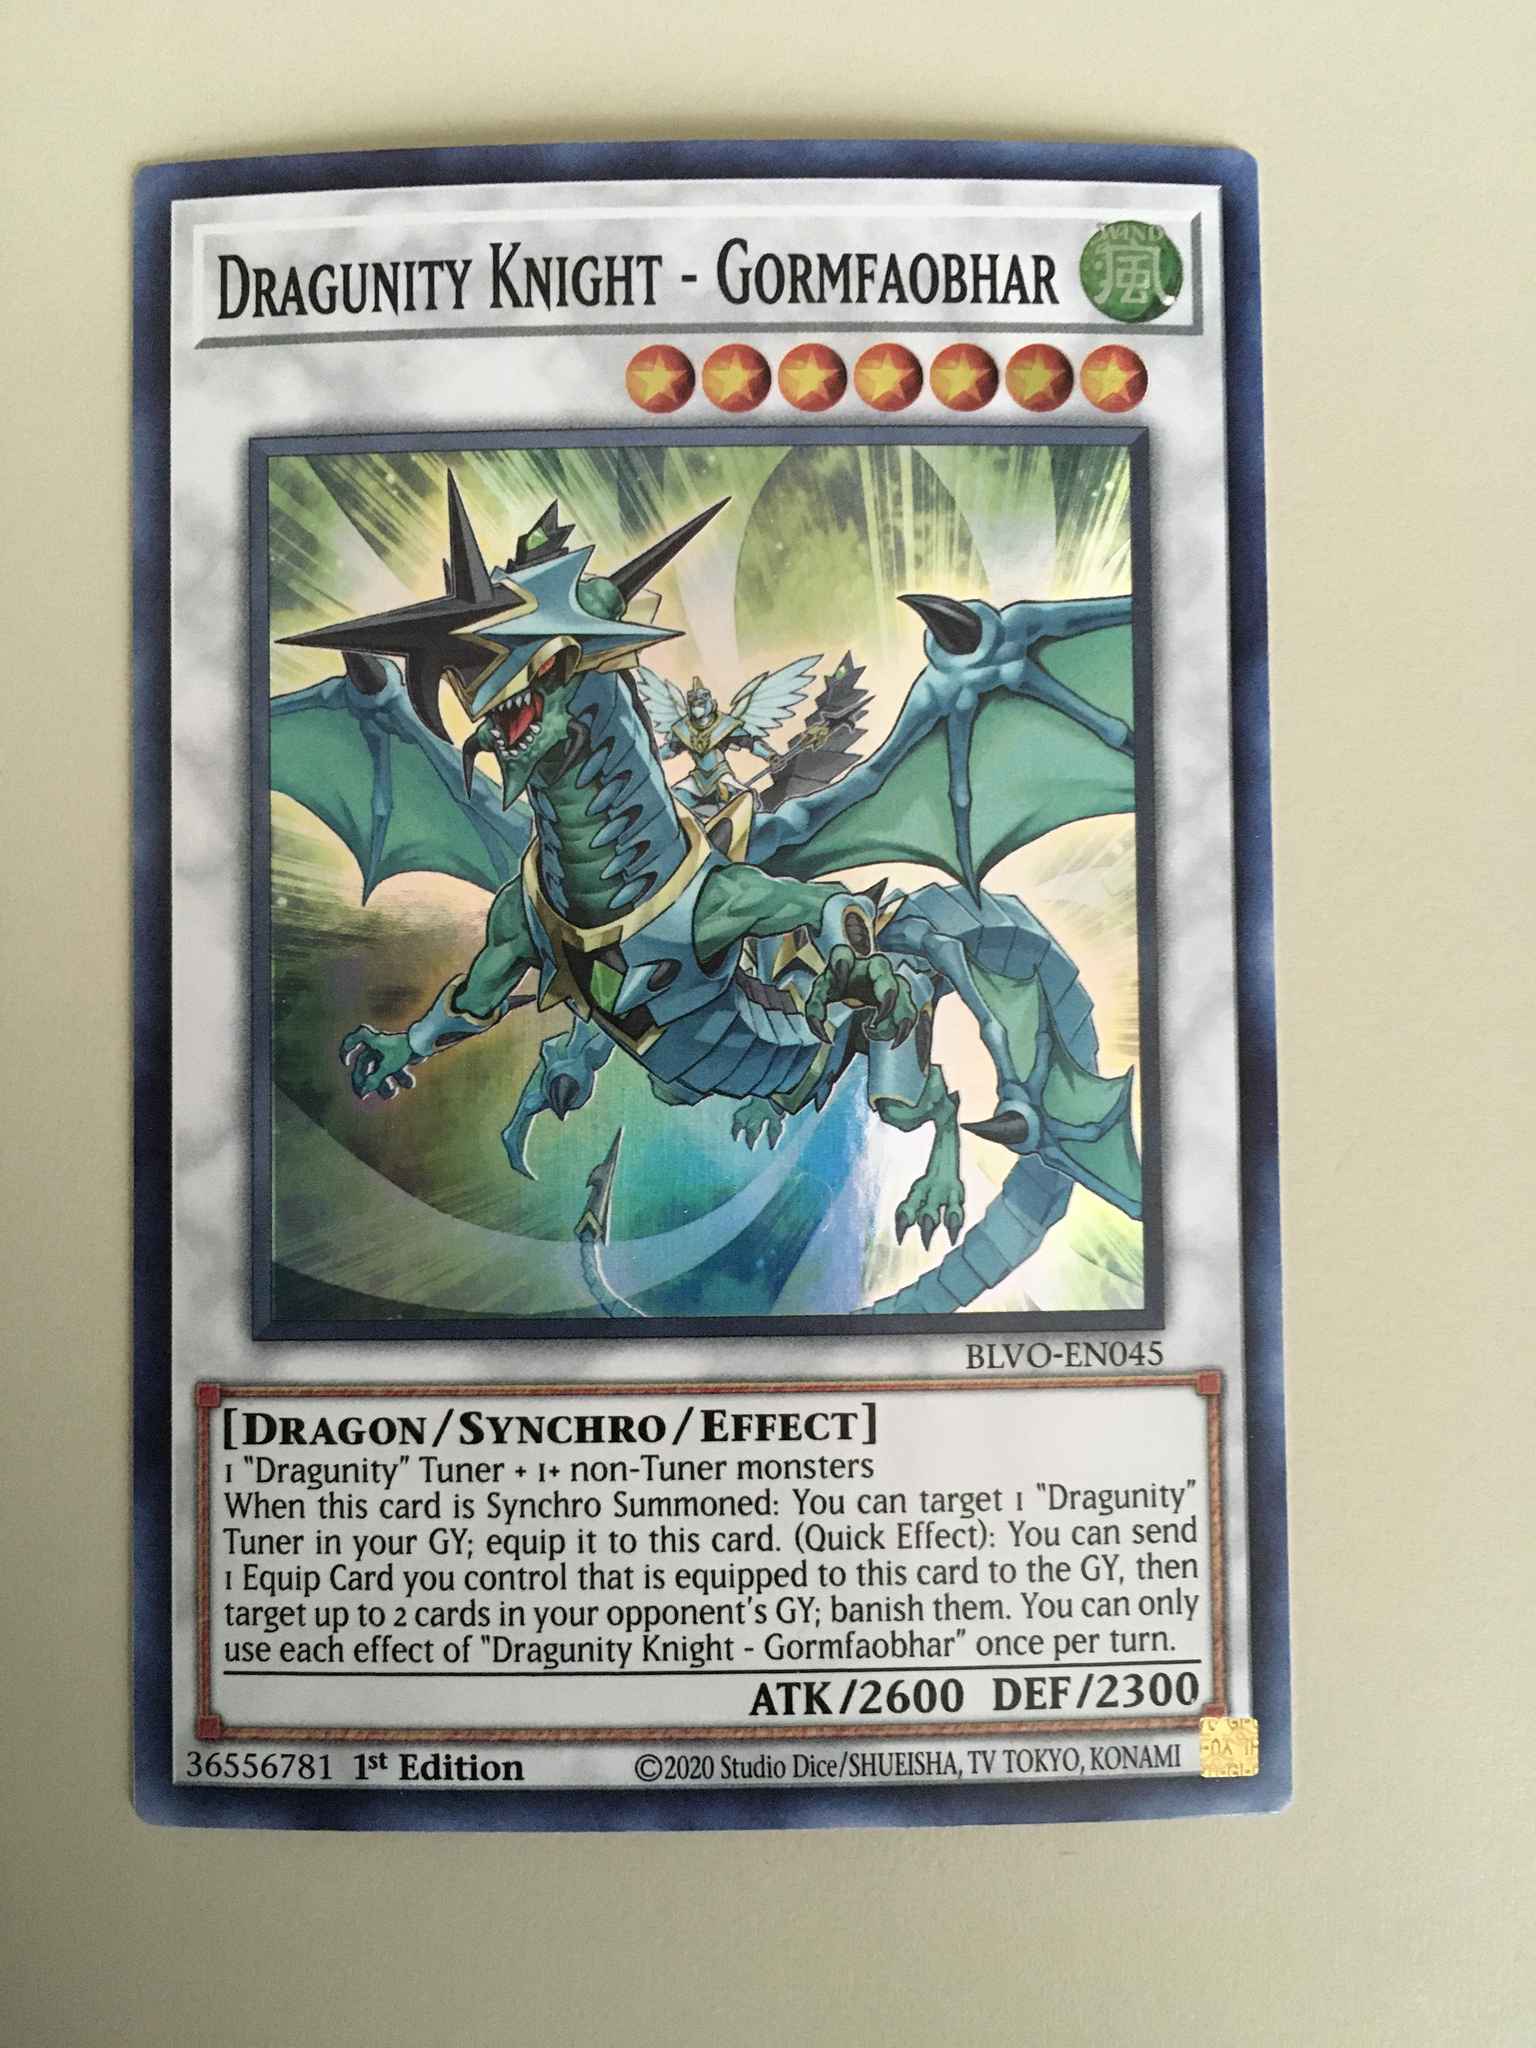 3 x Dragunity Knight NEW Super Rare Yu-Gi-Oh! Gormfaobhar blvo-en045 1st Ed 